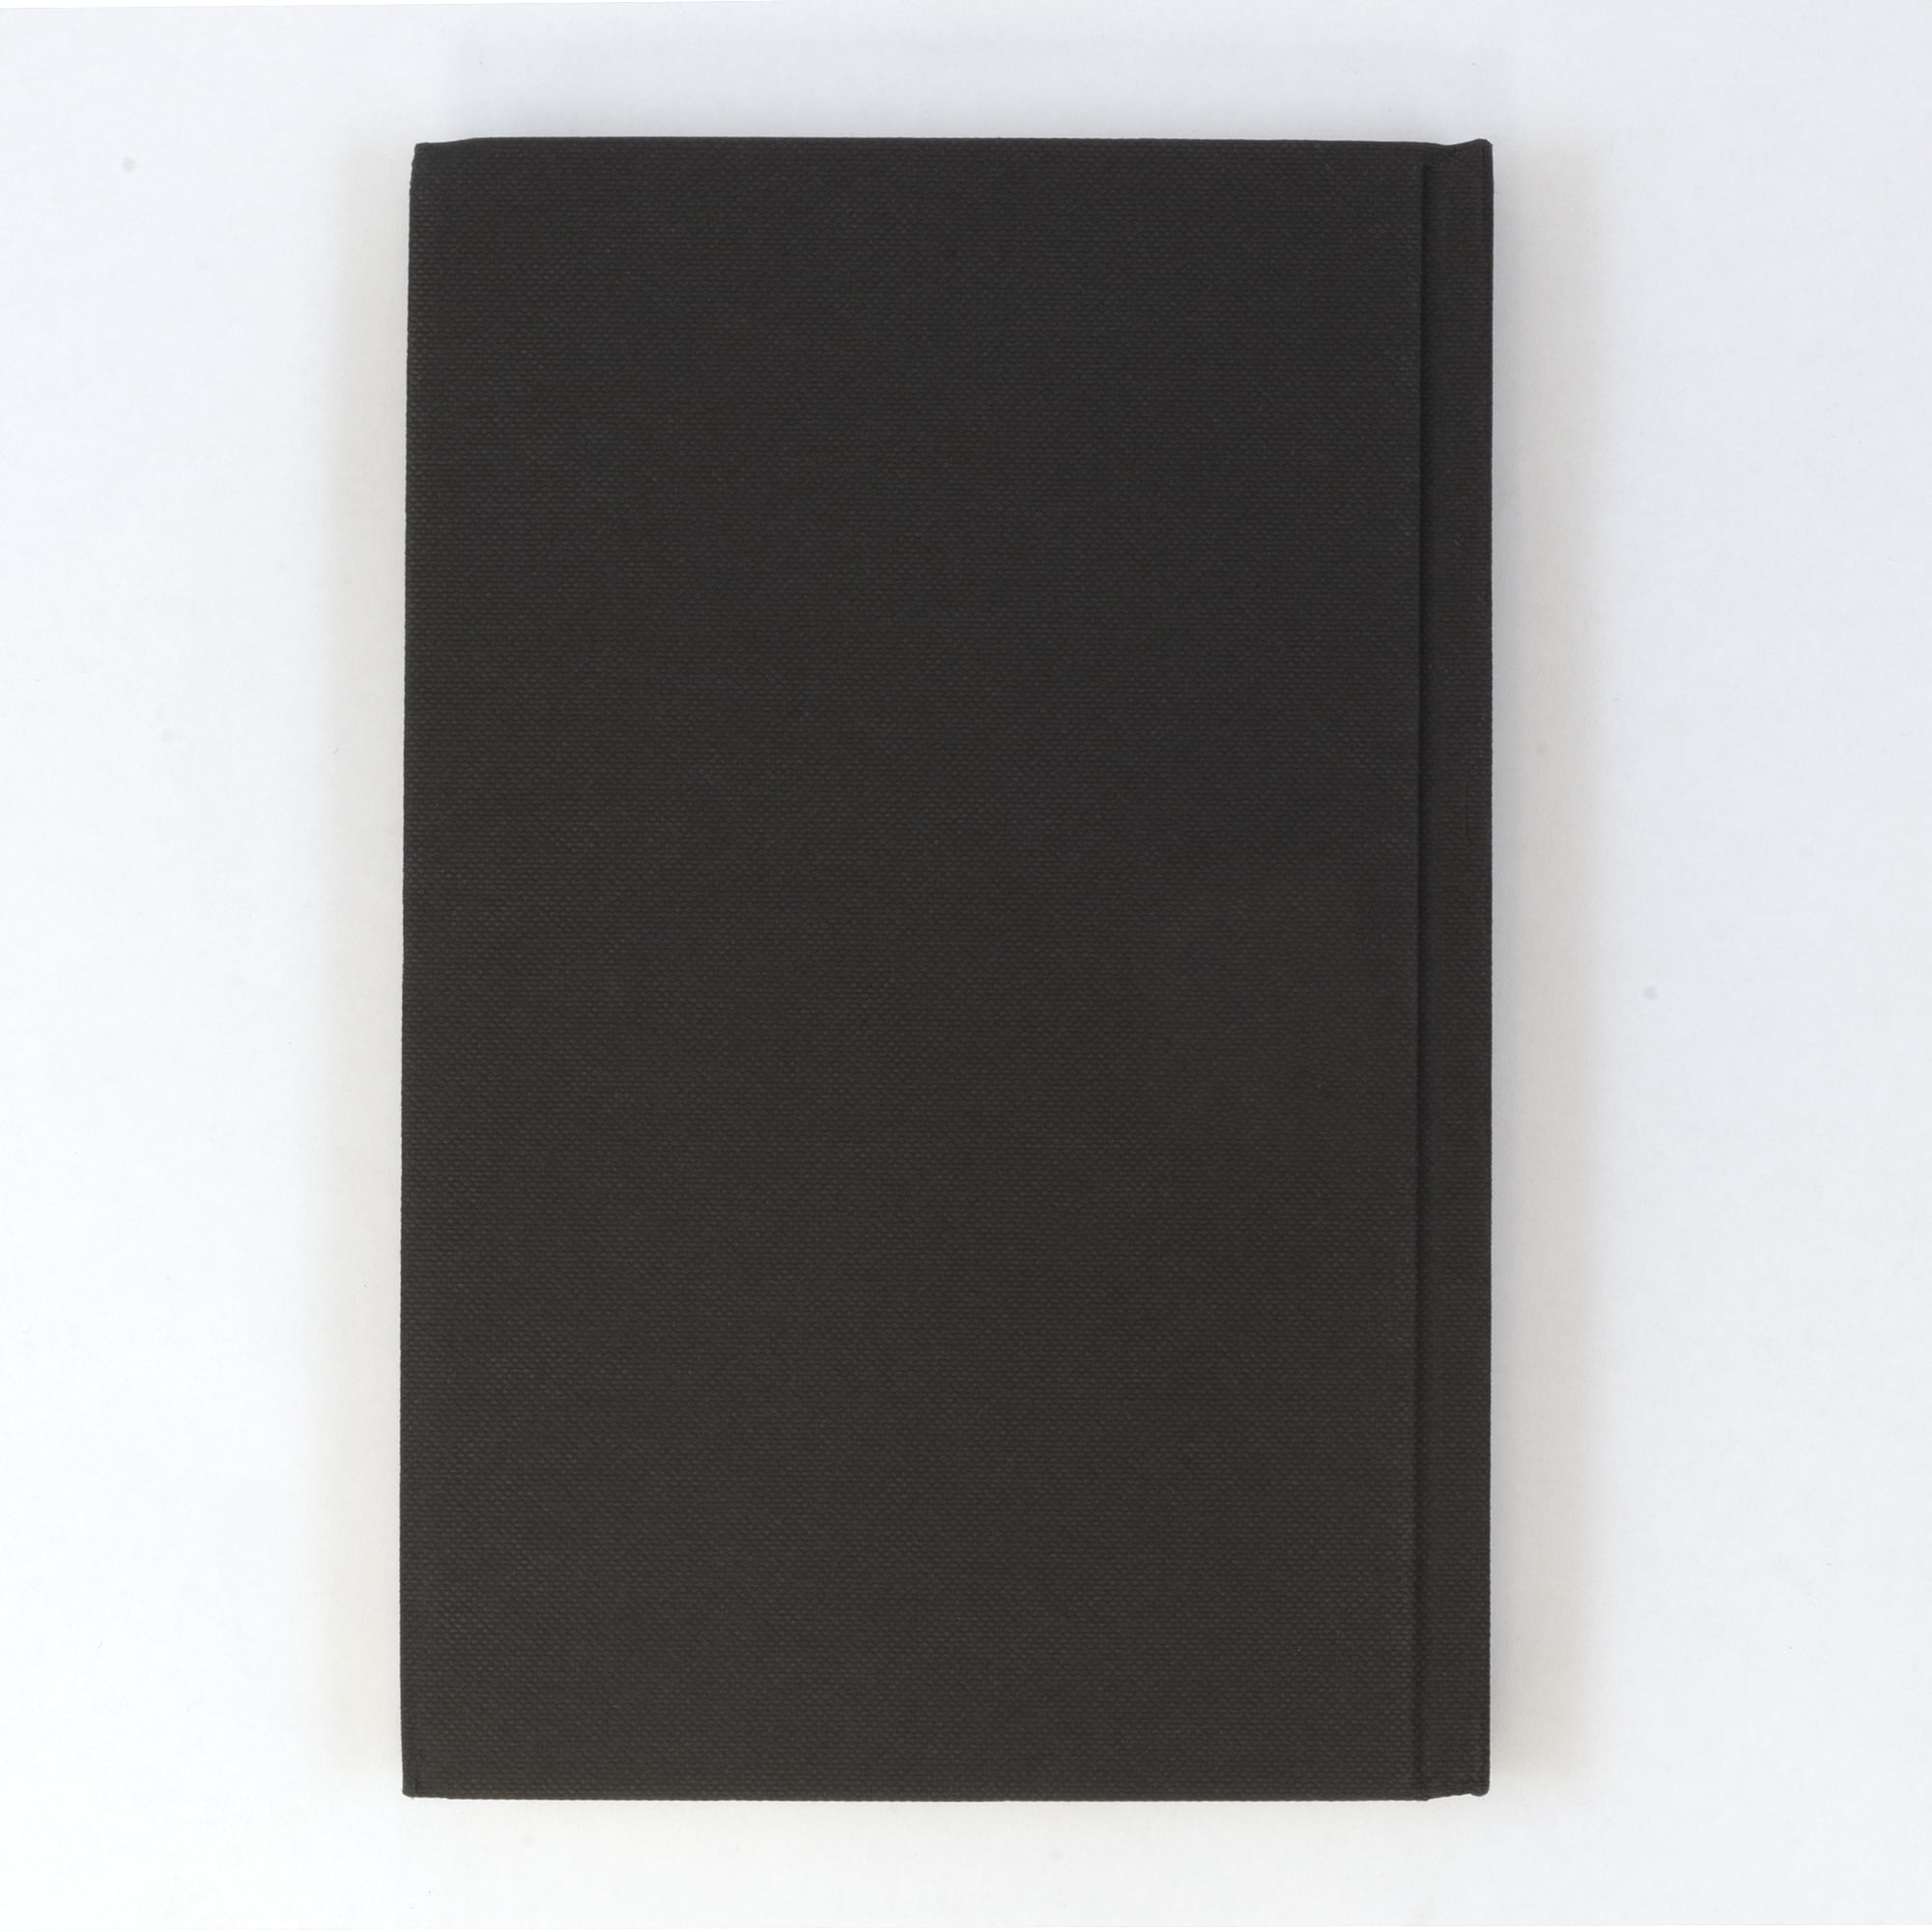 Denis Kitchen's Chipboard Sketchbook - Hardcover